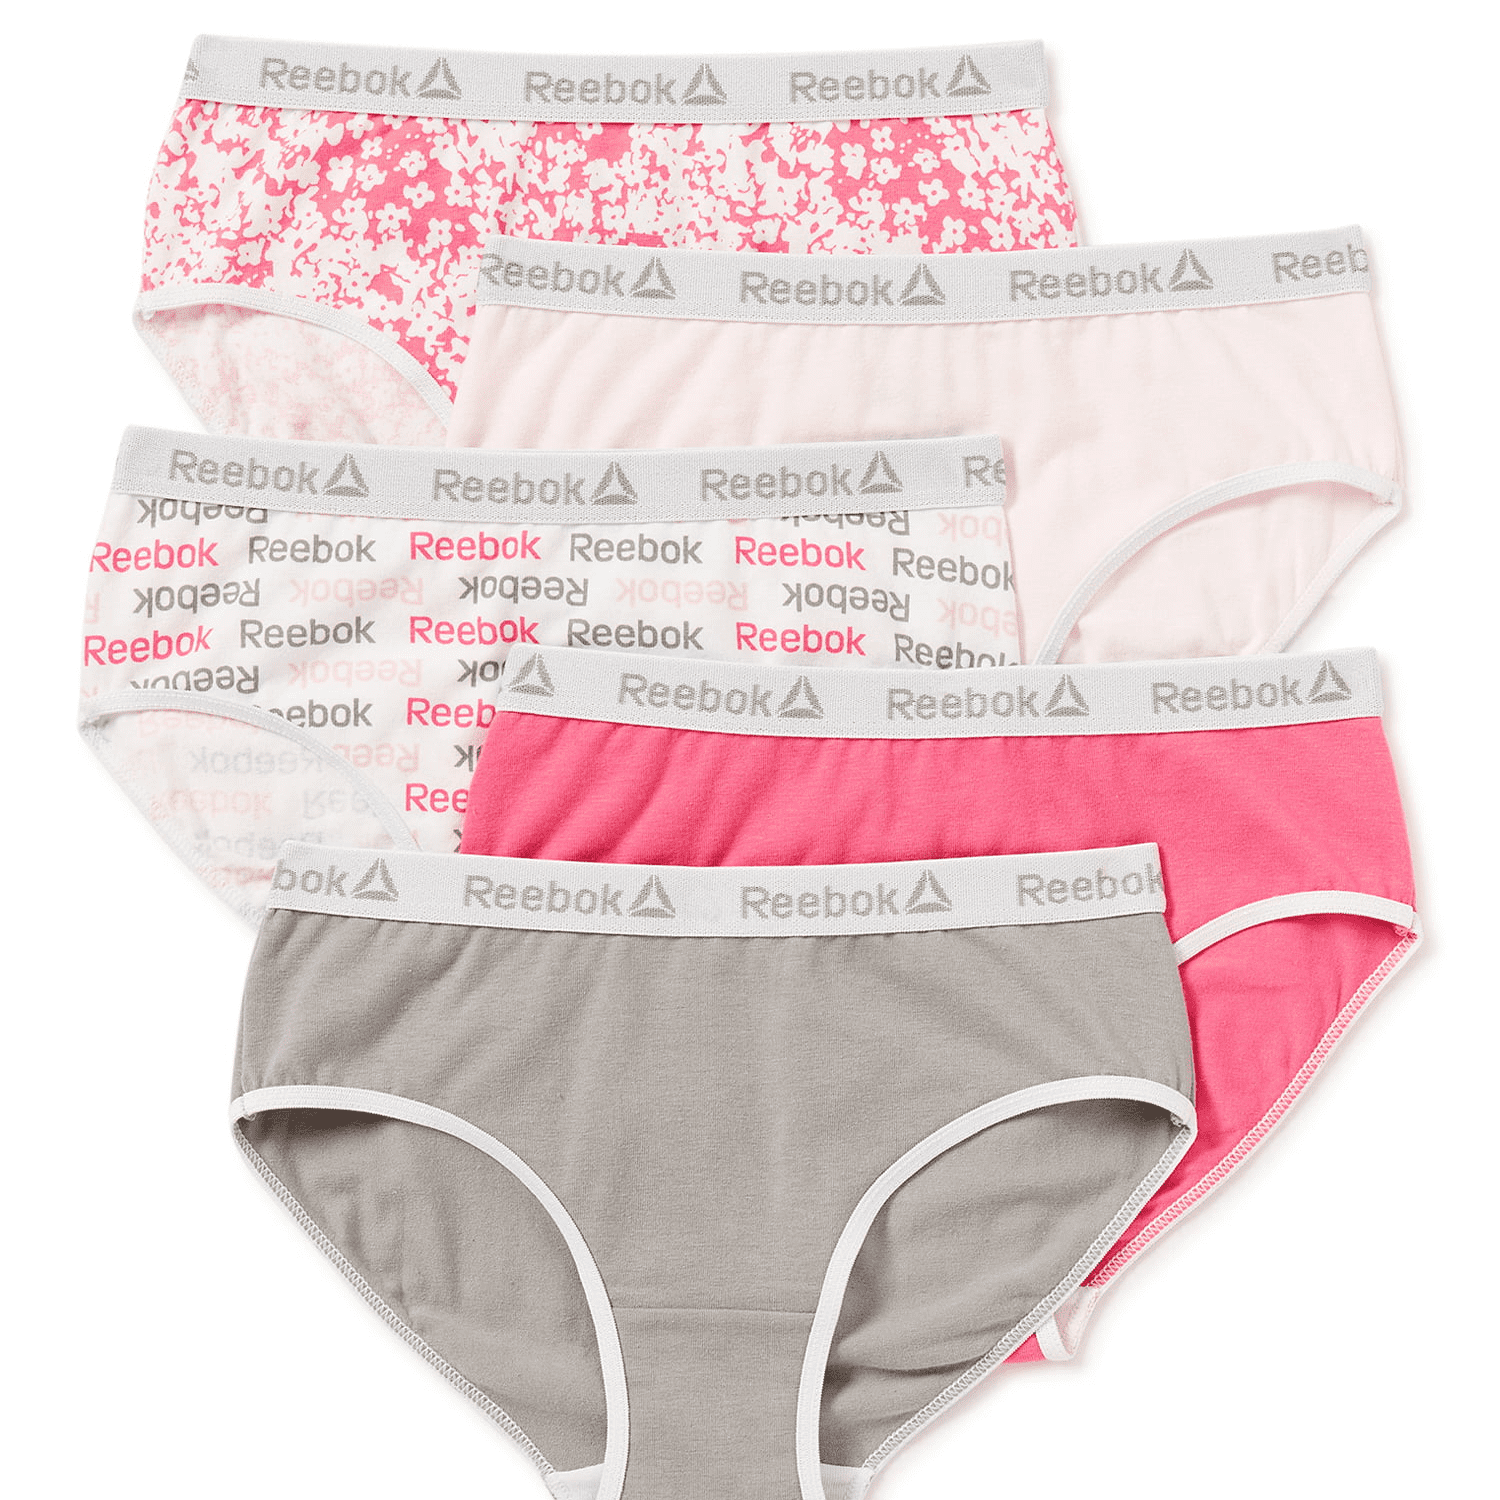 Reebok Girls' Underwear, Cotton Stretch Hipster Panties, 5 Pack, Sizes S-XL